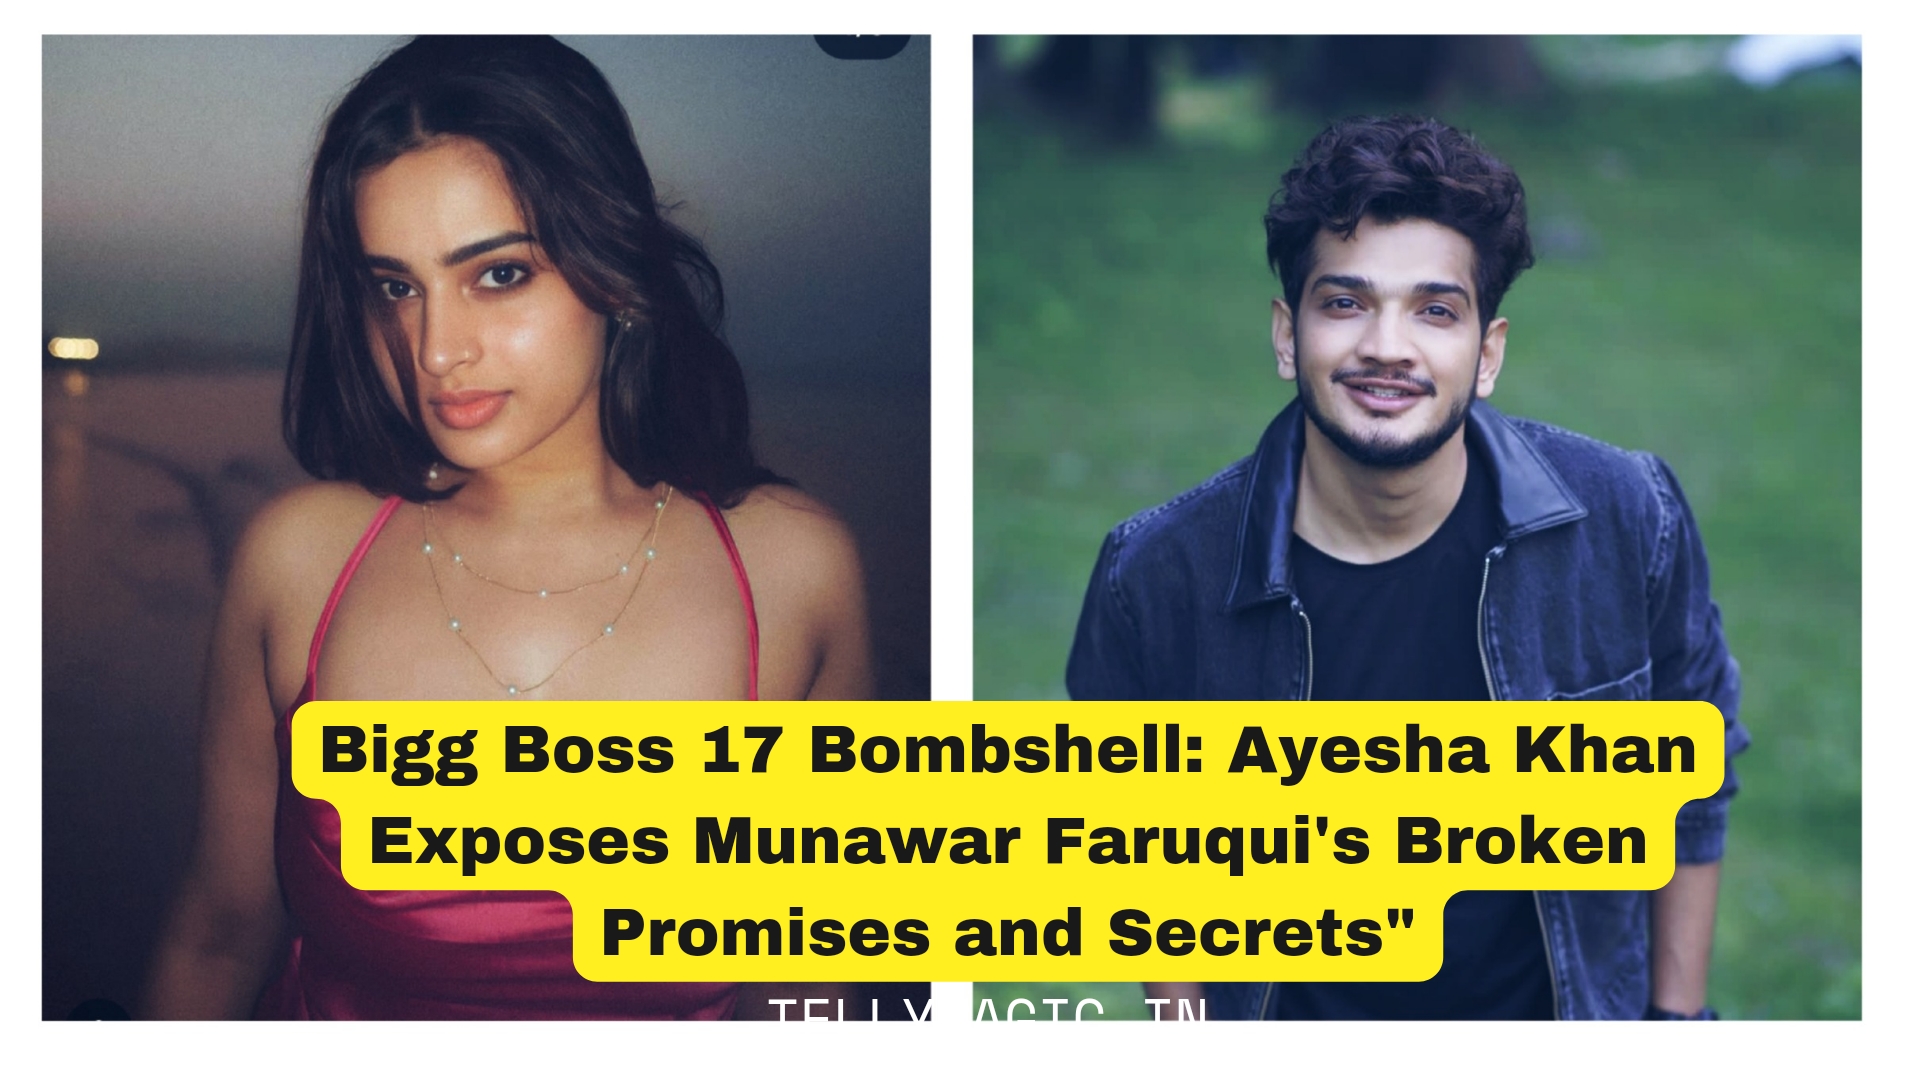 Bigg Boss 17 Bombshell: Ayesha Khan Exposes Munawar Faruqui’s Broken Promises and Secrets”